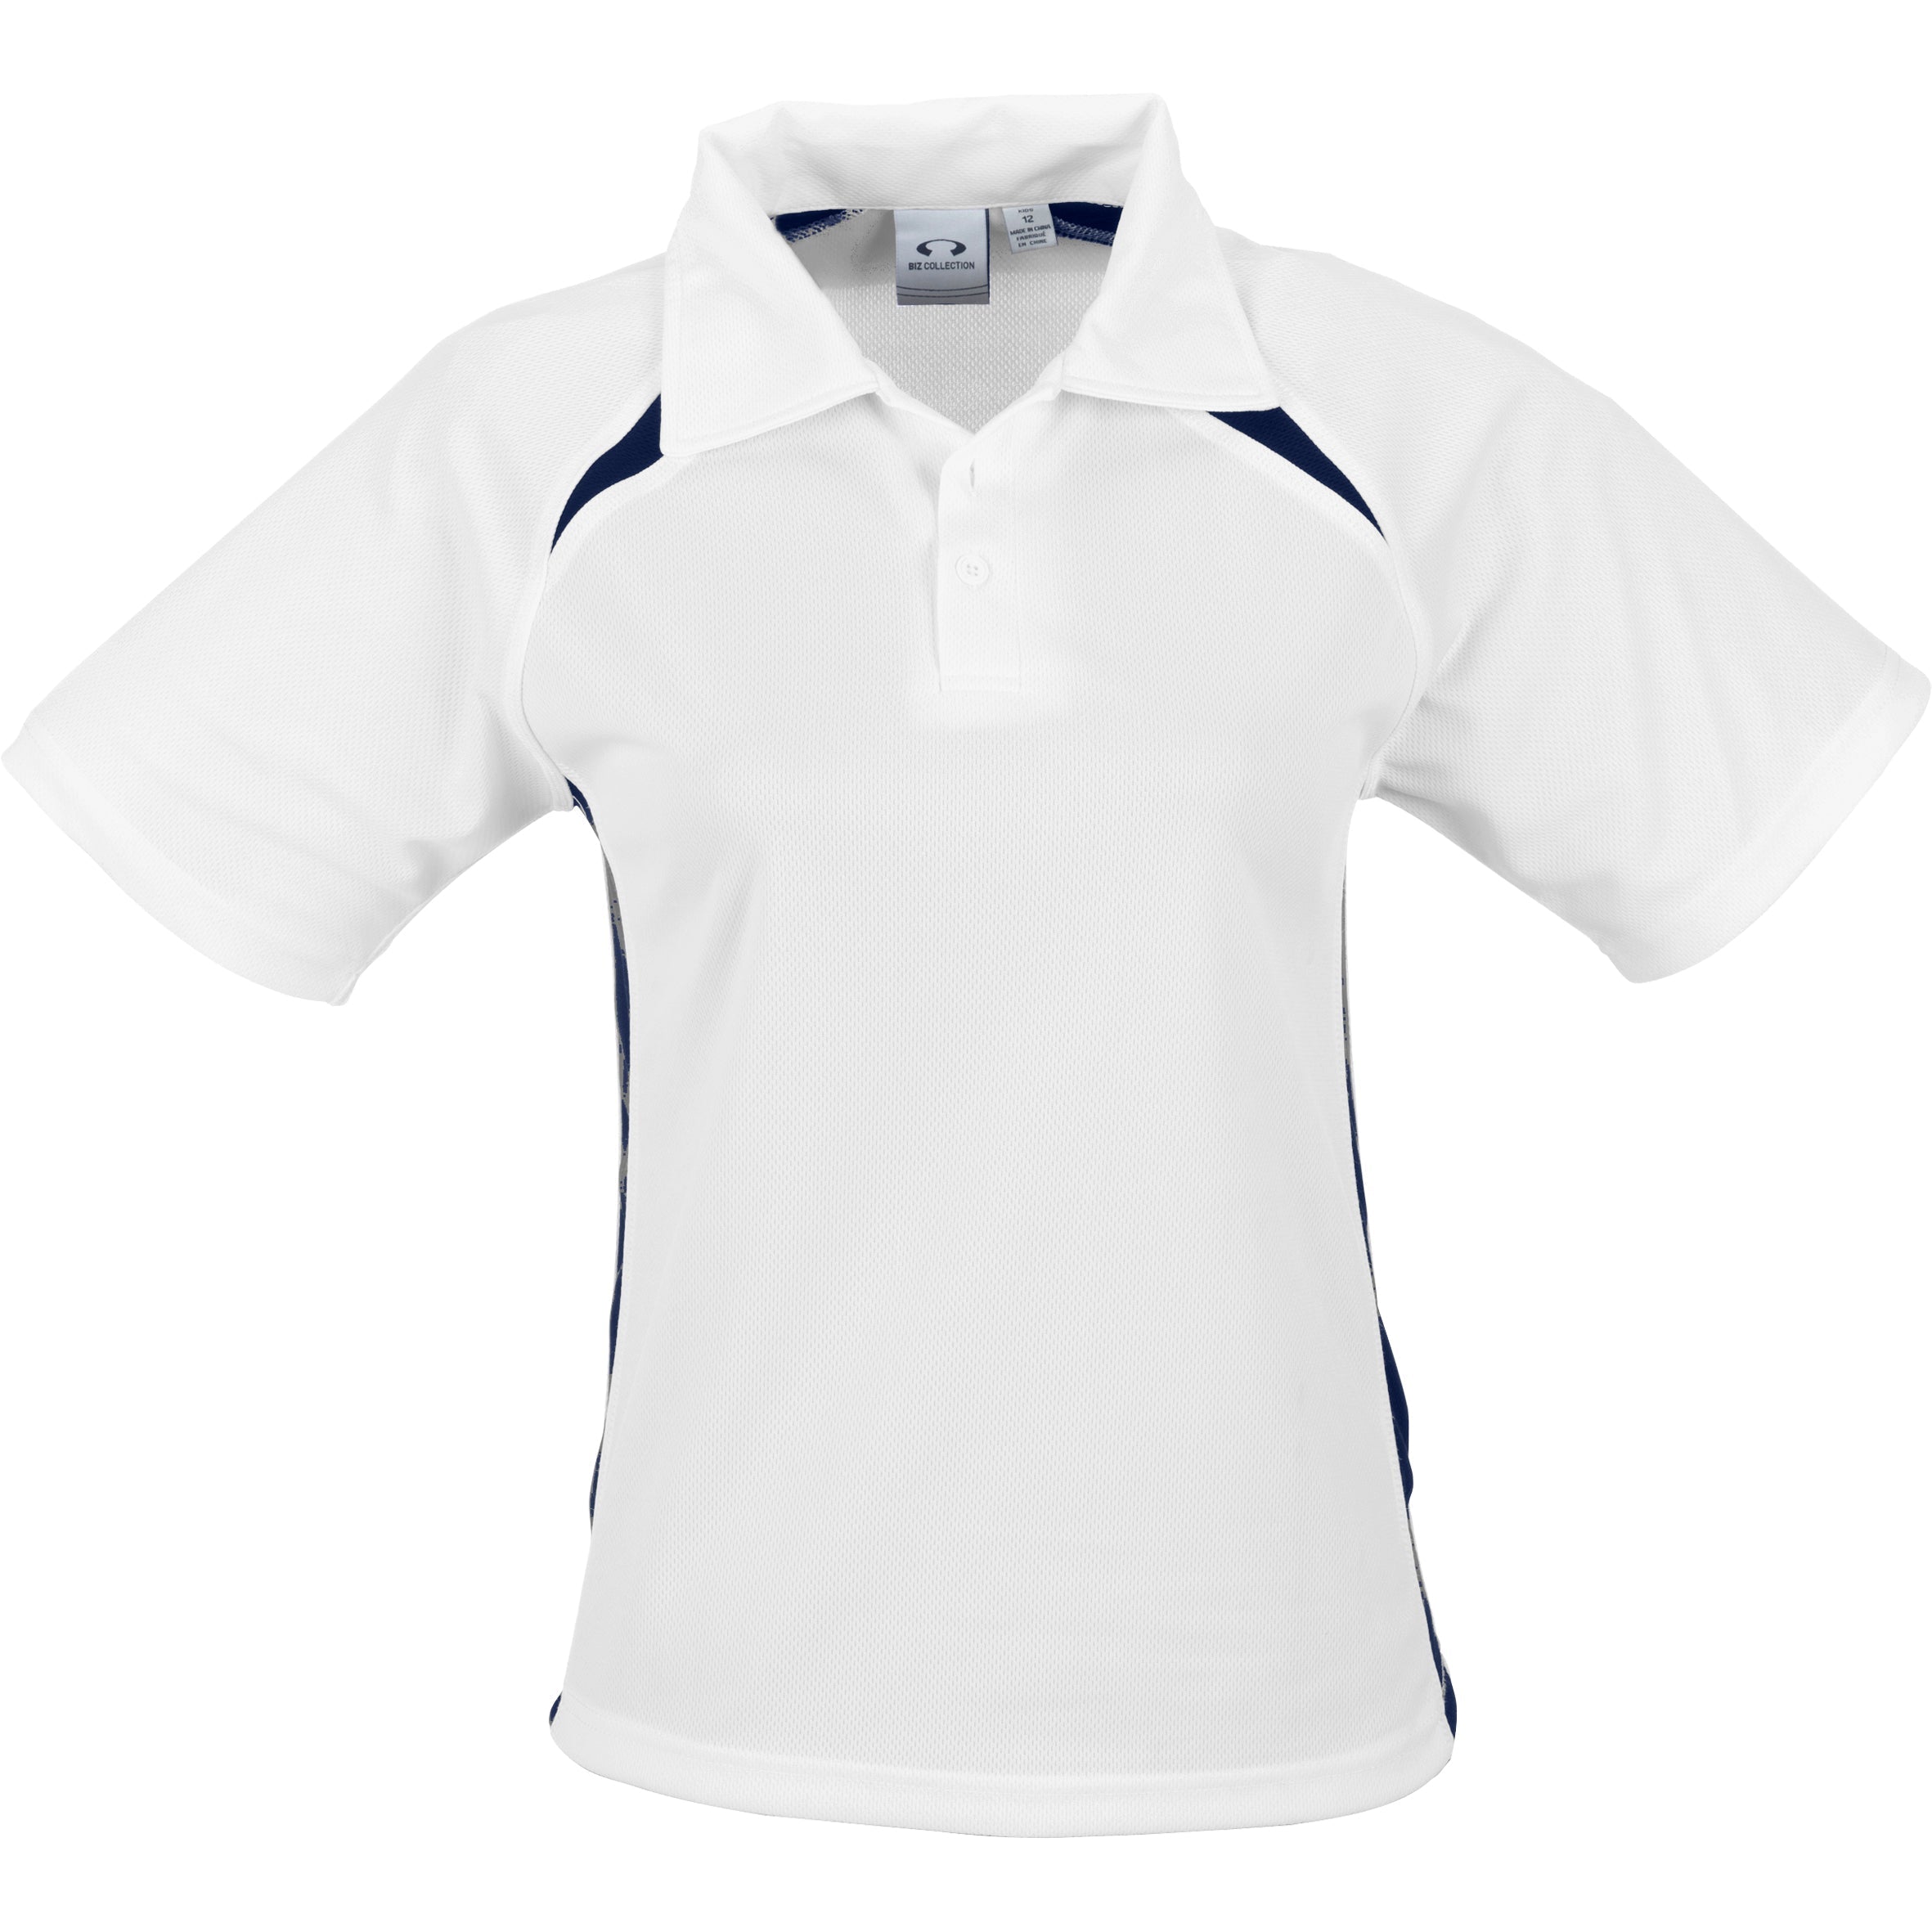 Kids Splice Golf Shirt-Shirts & Tops-8-White-W